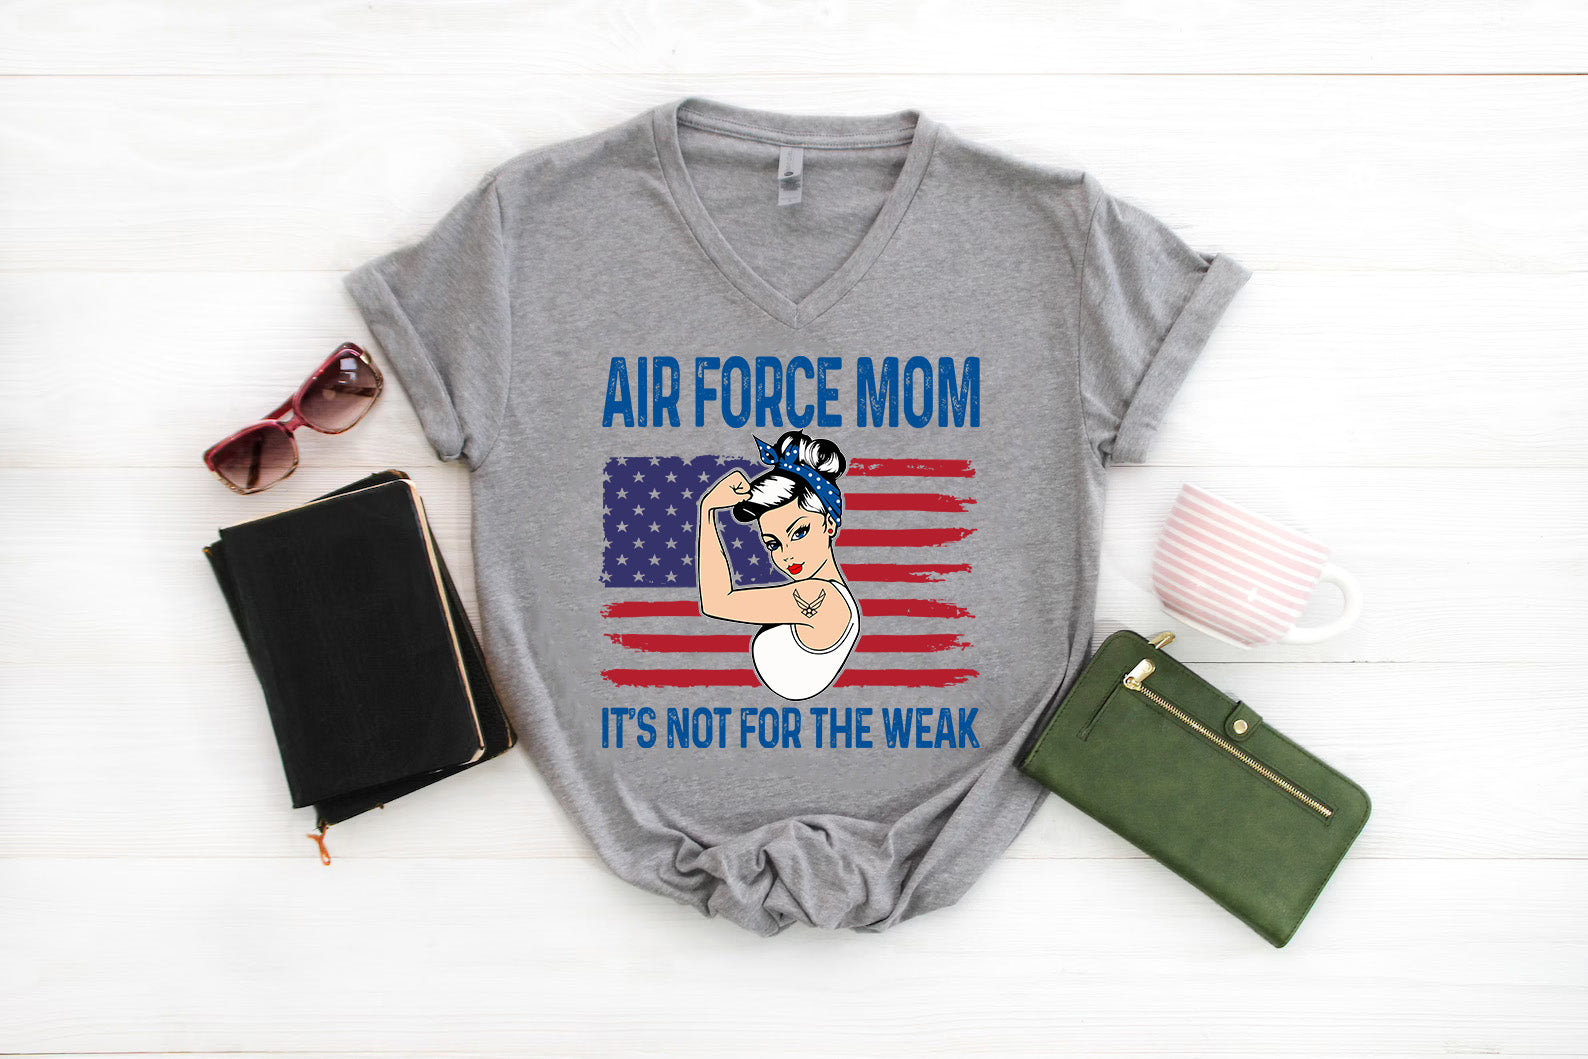 Air Force Mom T-shirt